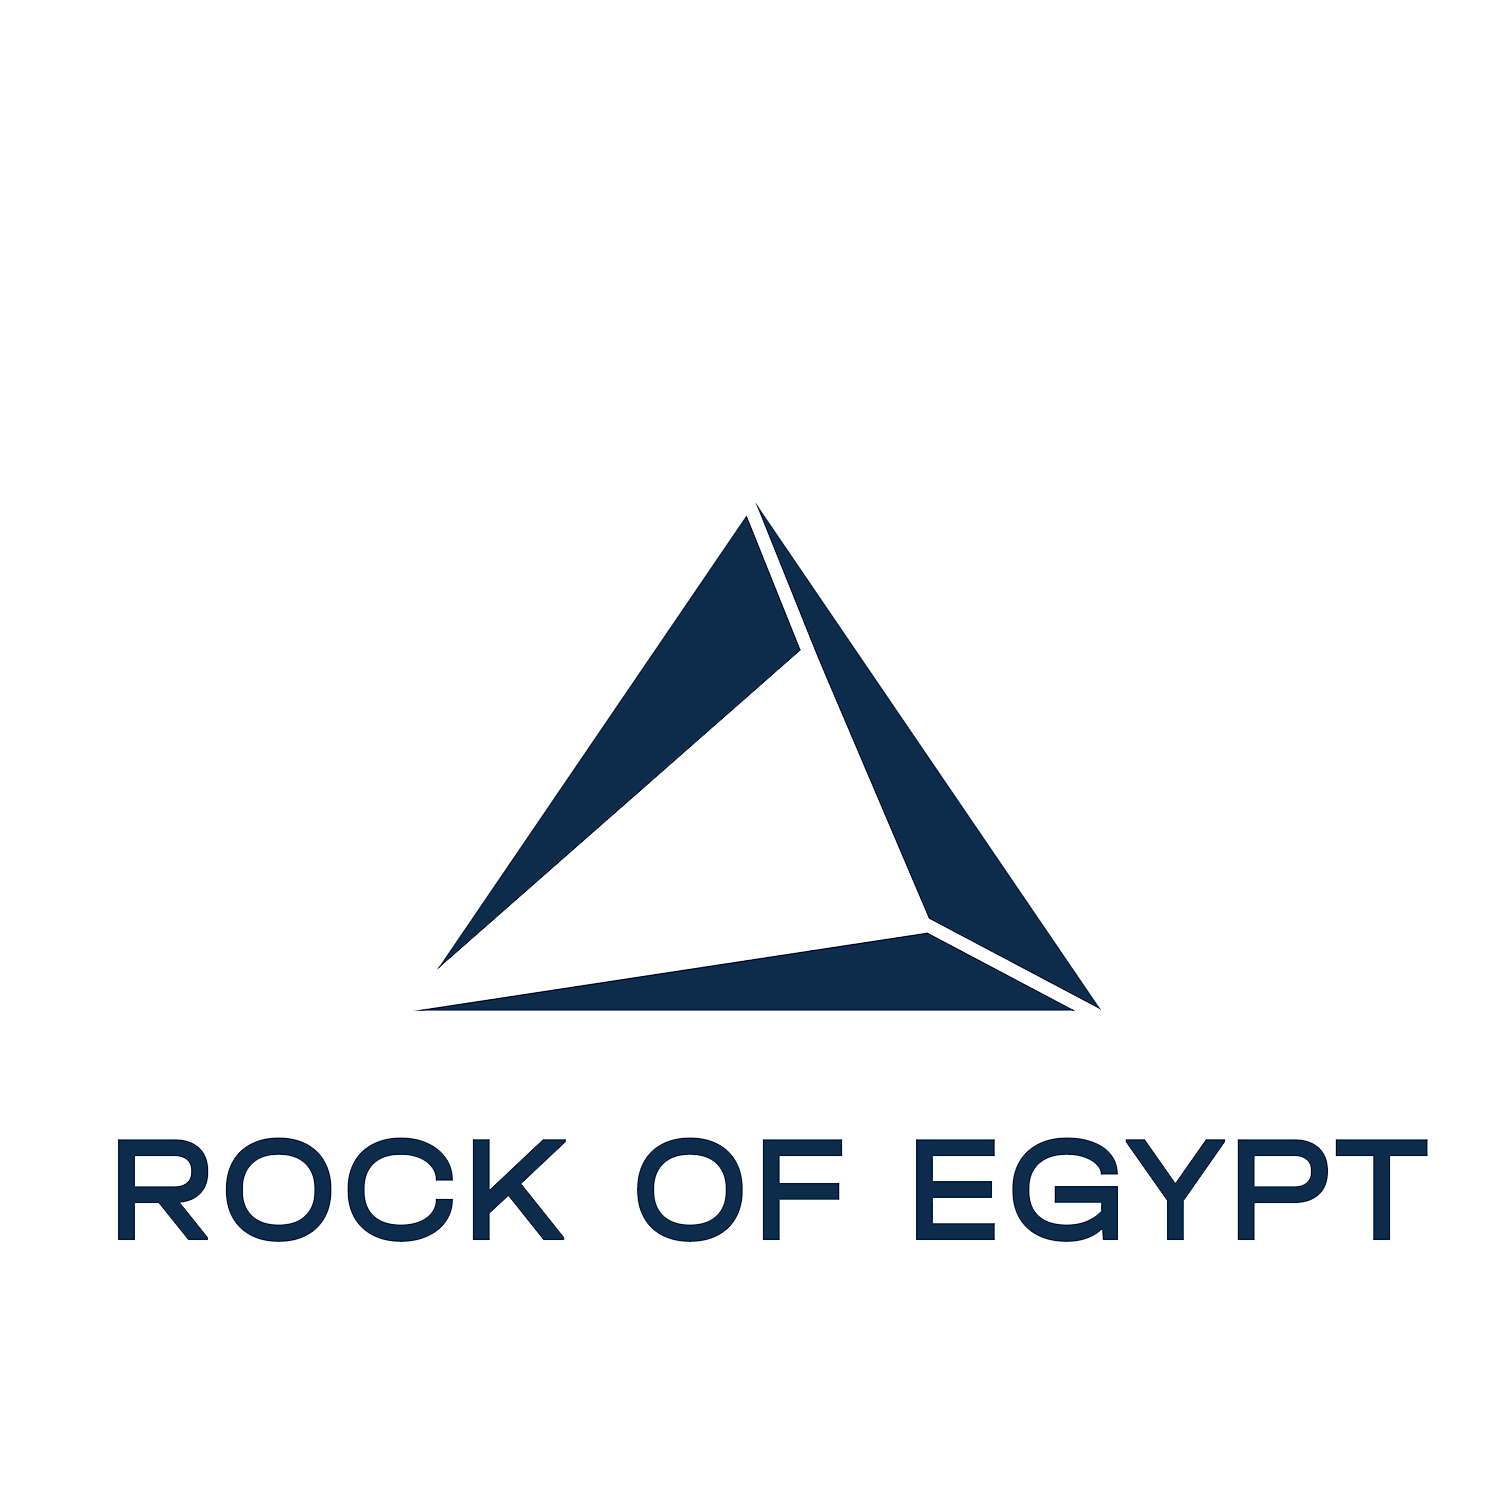 The rock Egypt company